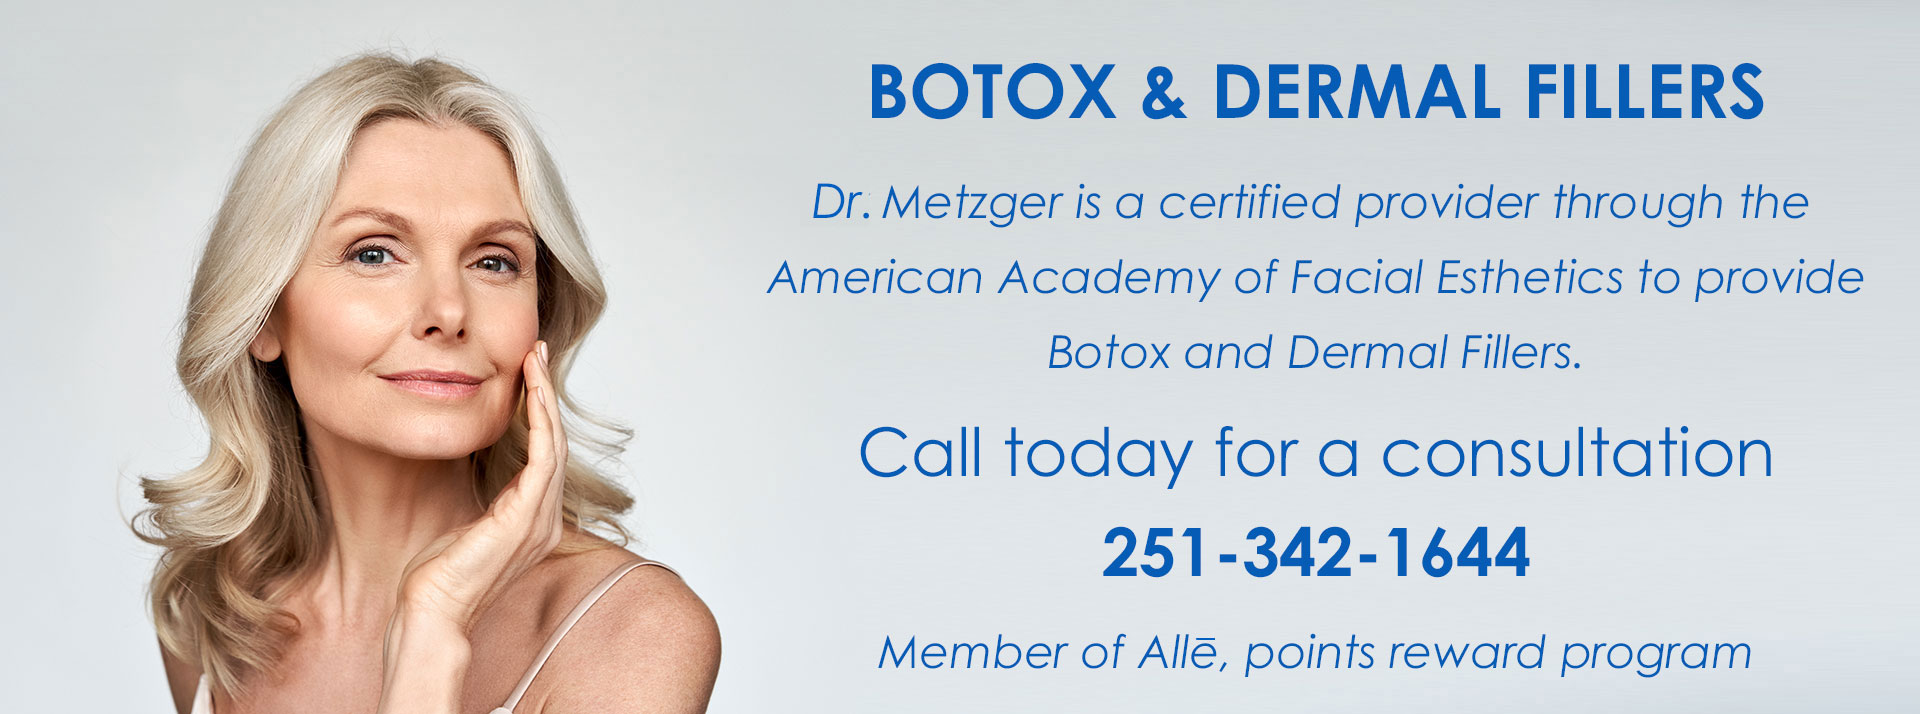 Botox and Dermal Fillers